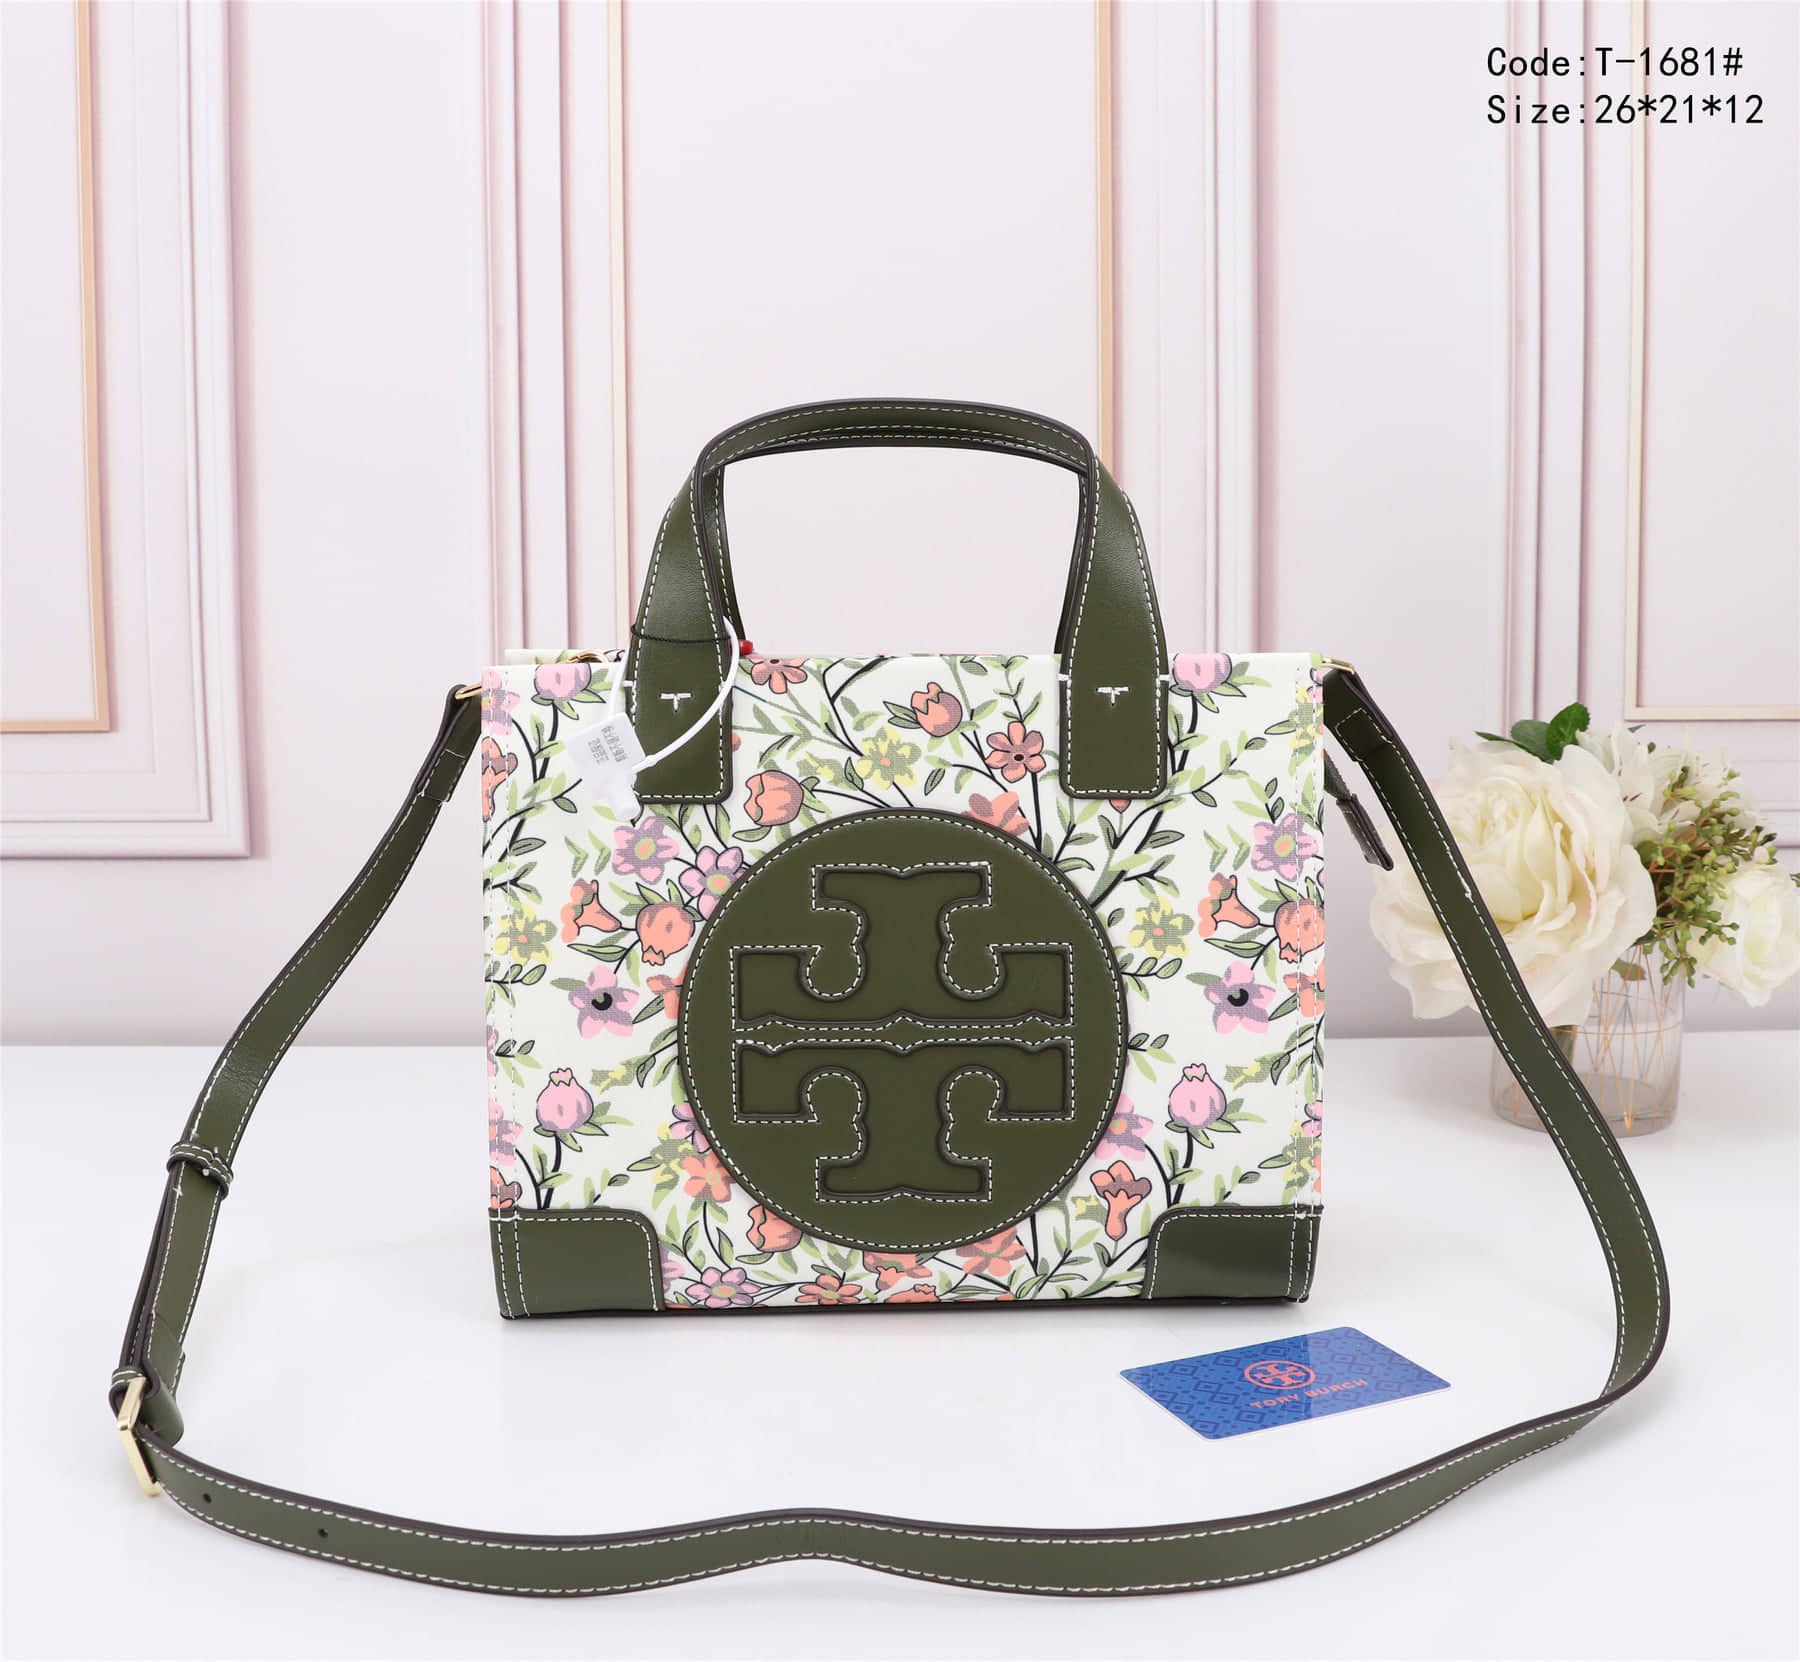 TB1681 Casual Handbag With Sling StyleMoto Green Printed Floral 